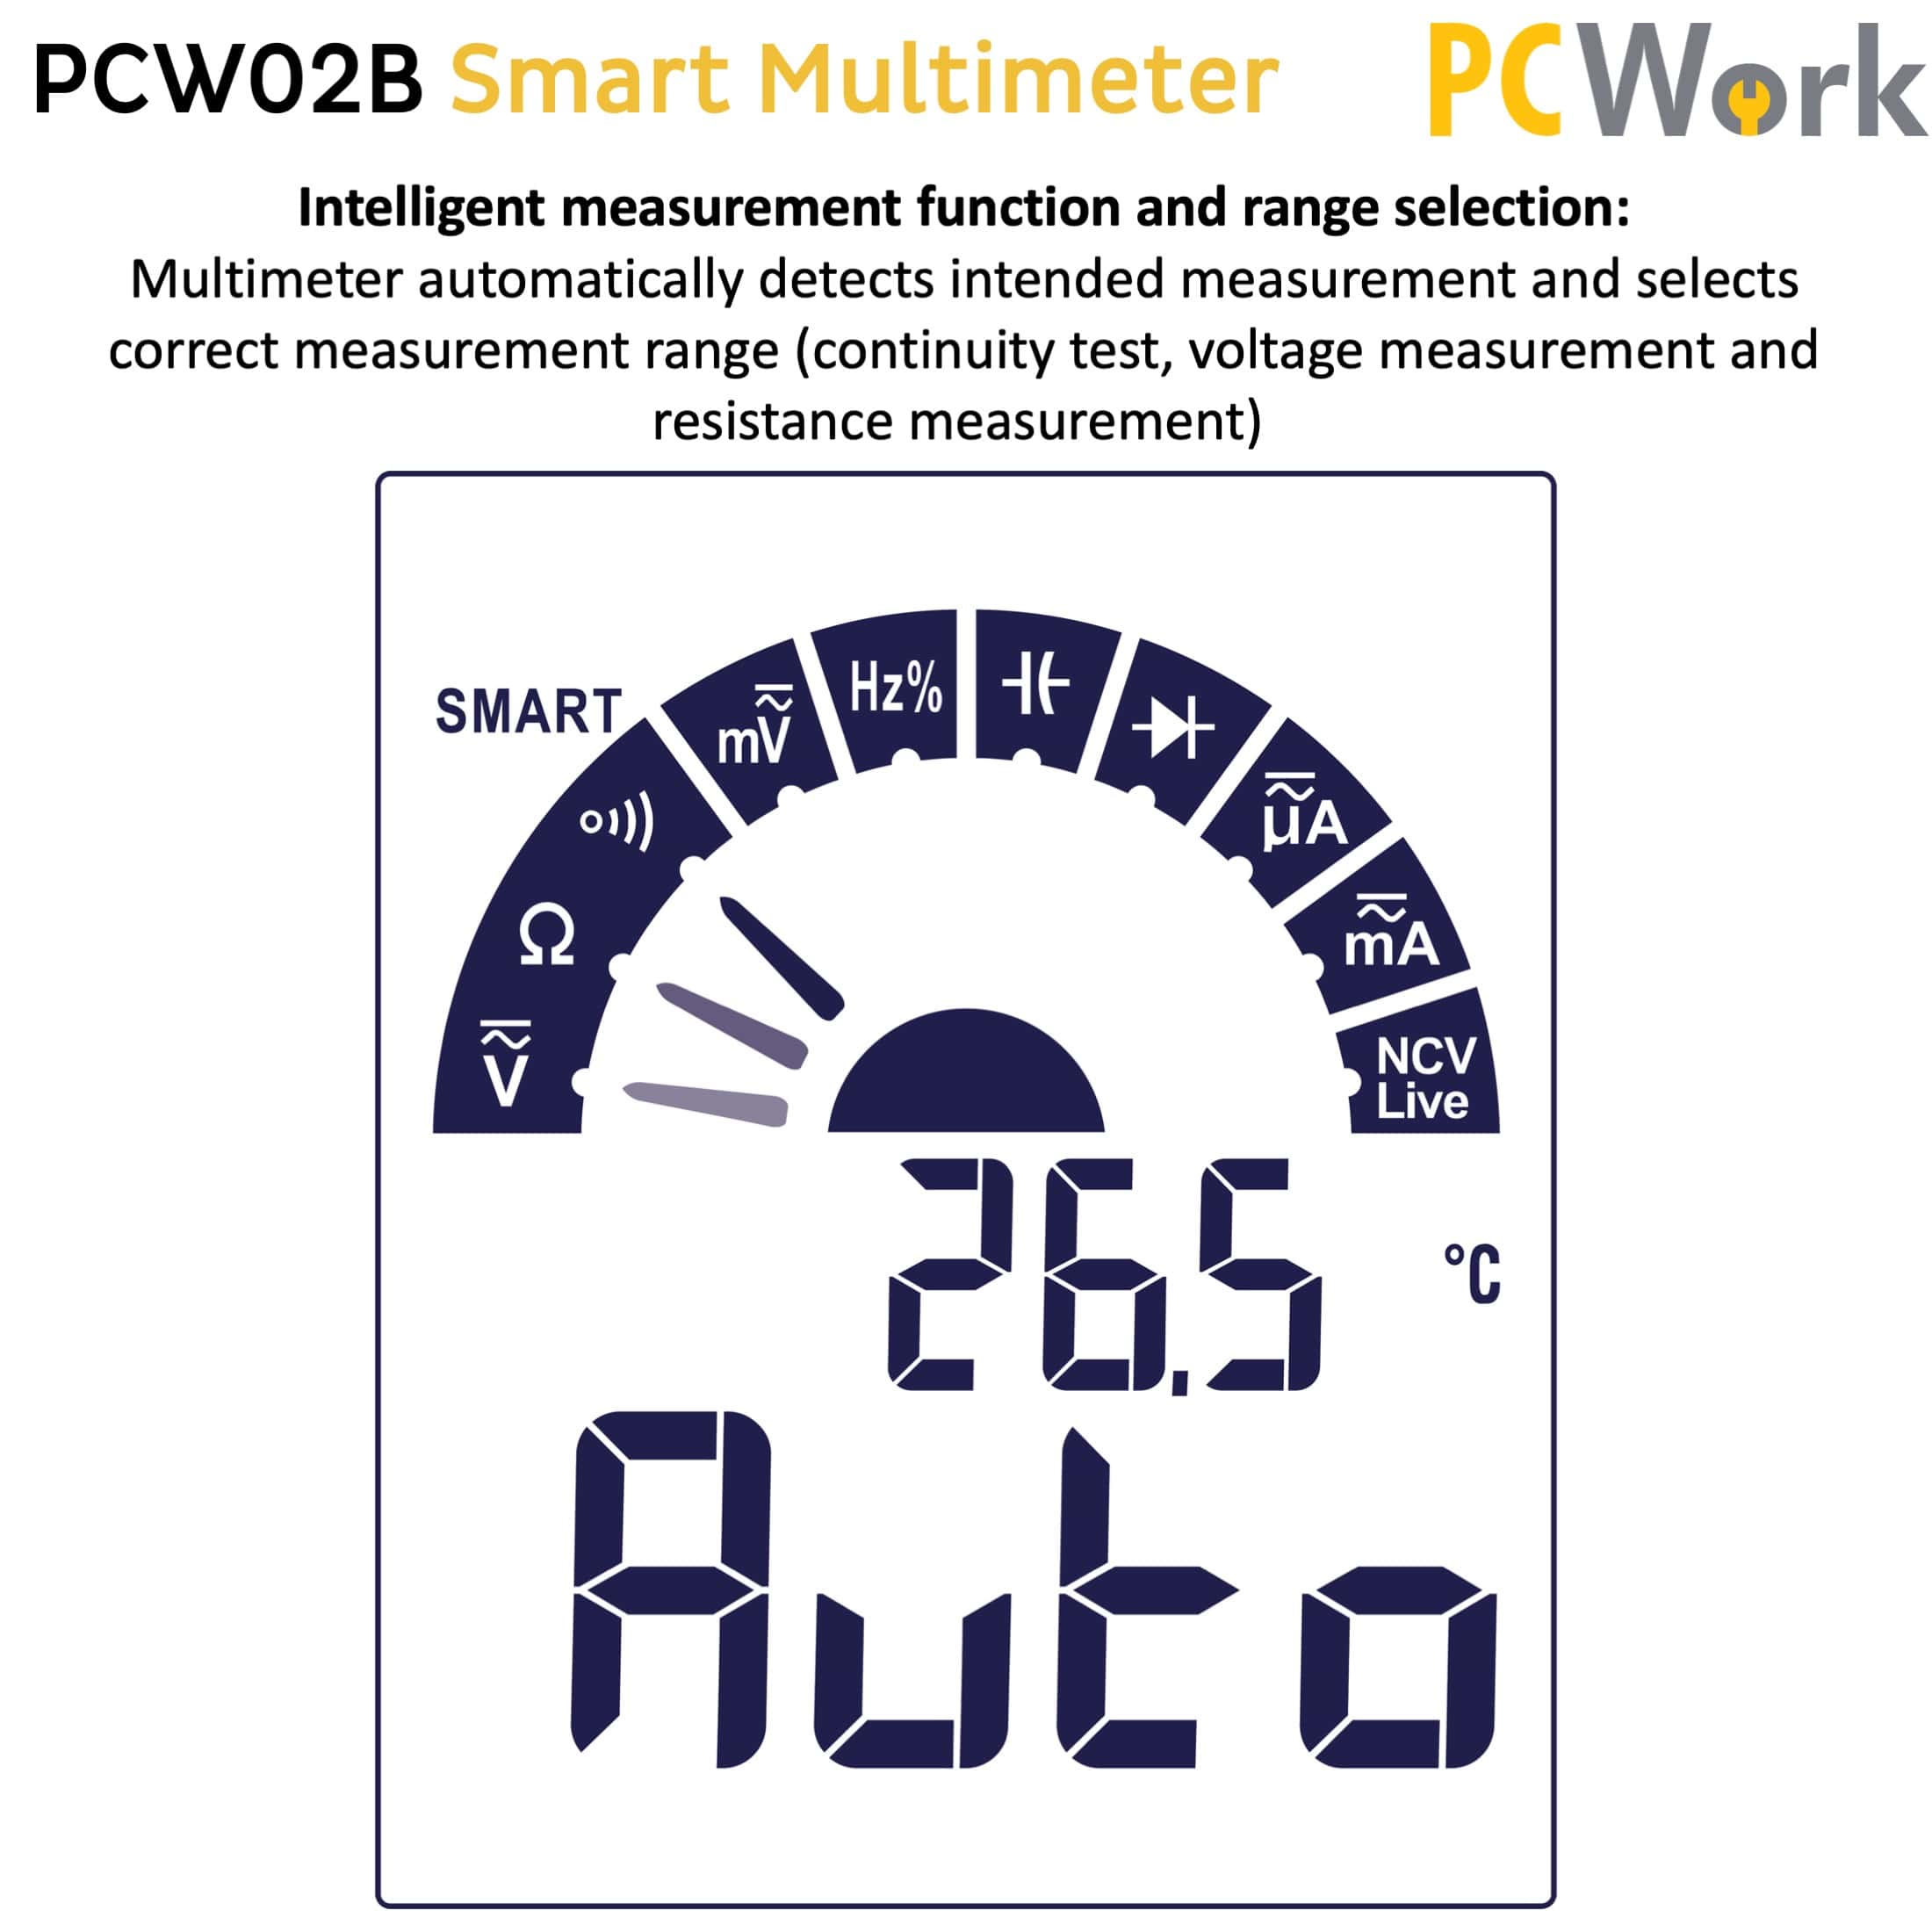 PCW02B Digitalmultimeter, digital, smart, True RMS